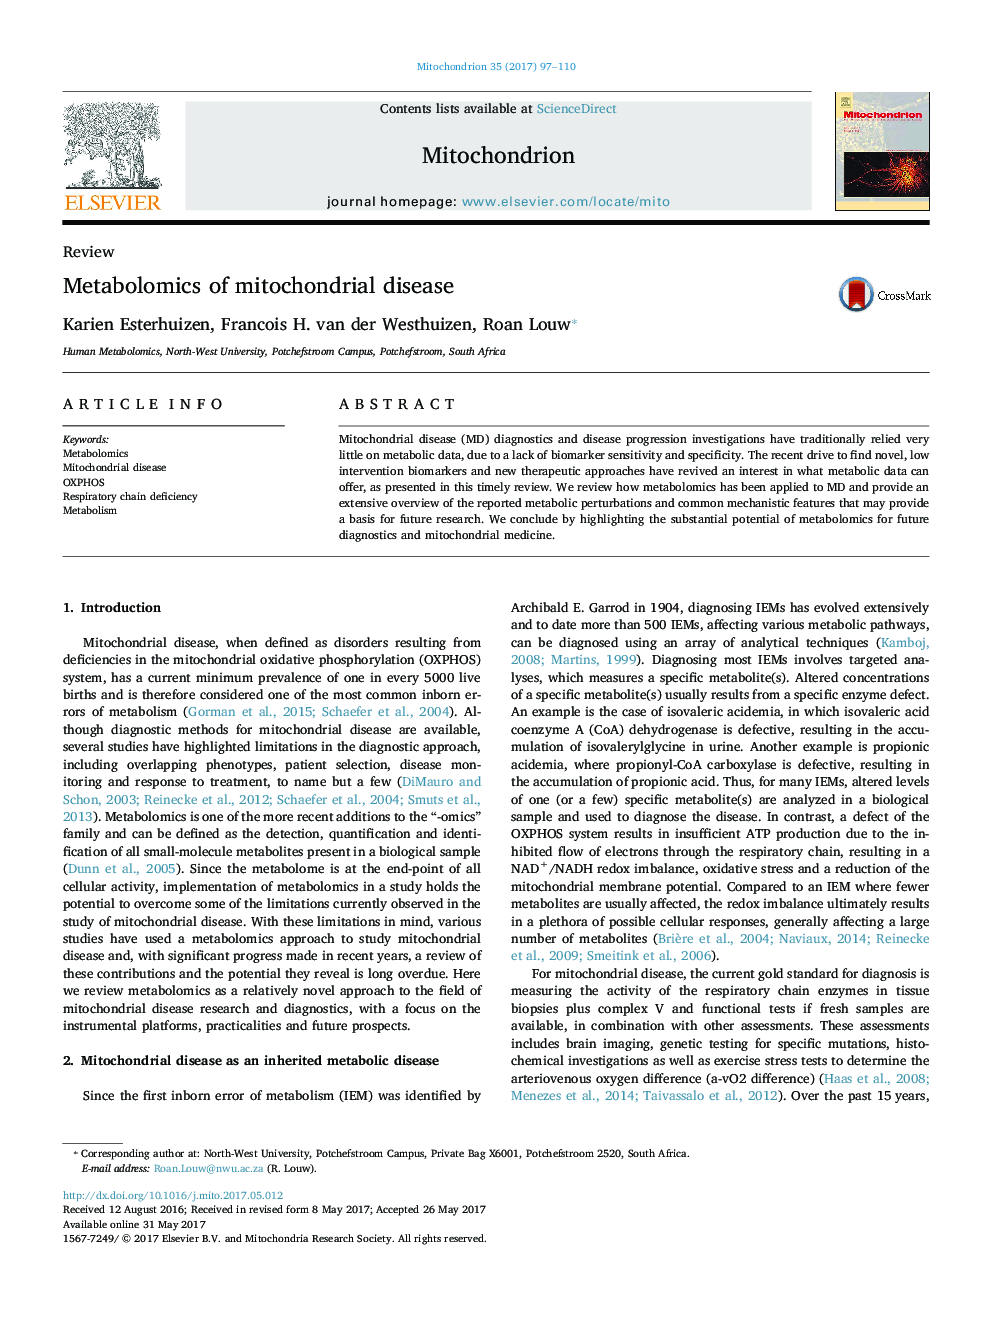 ReviewMetabolomics of mitochondrial disease